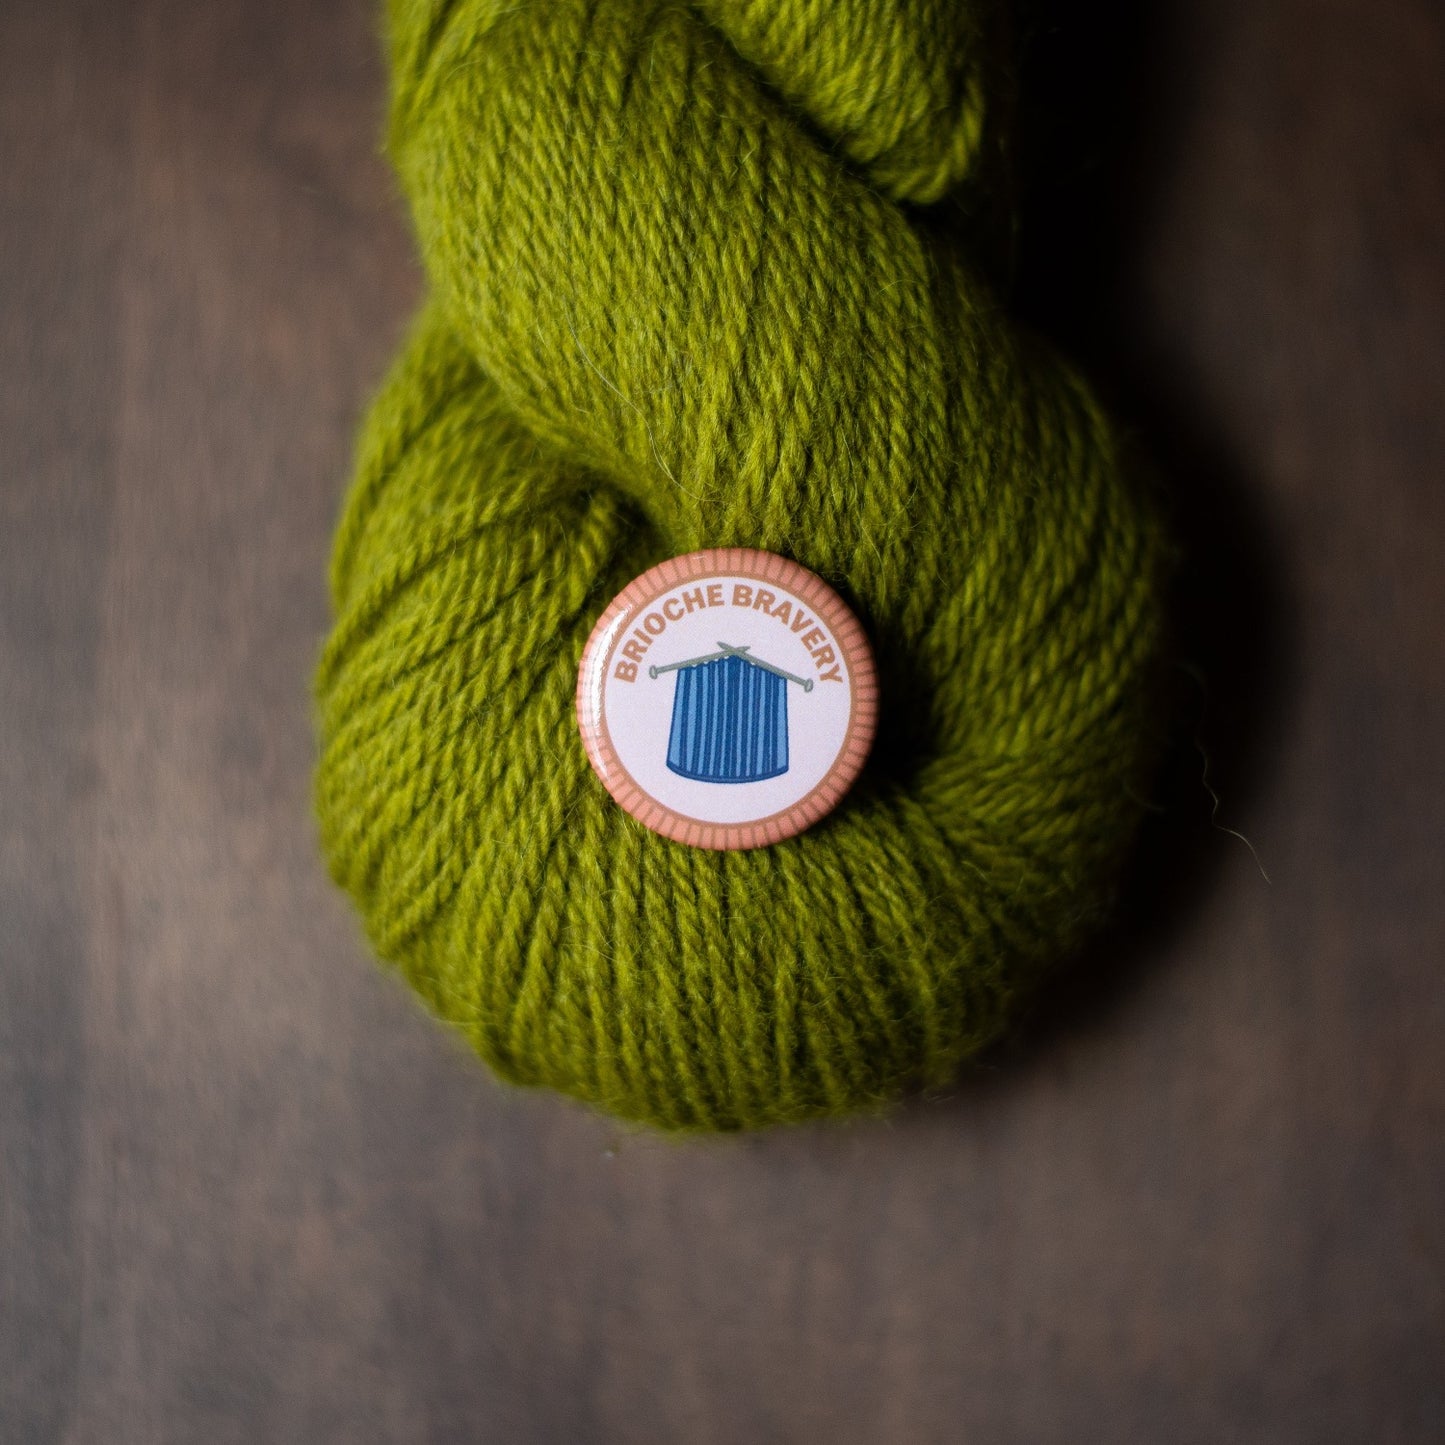 Brioche Bravery knitting merit badge